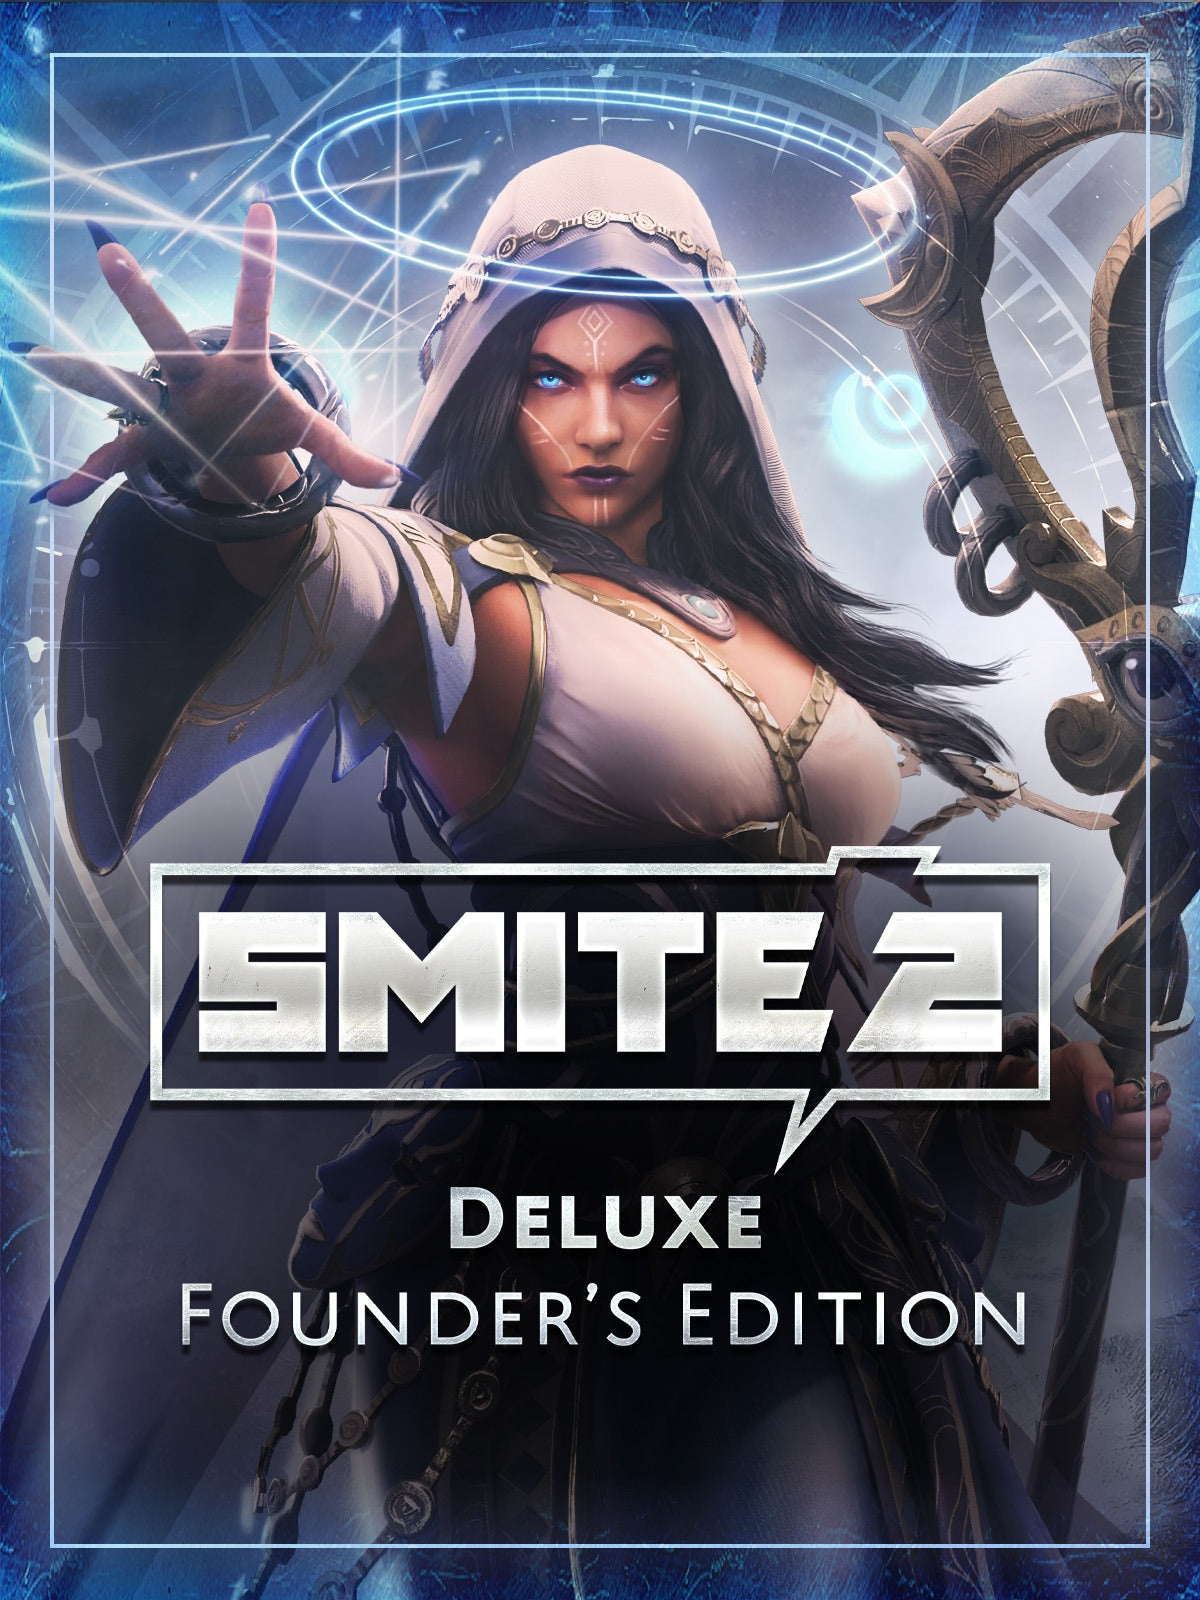 SMITE 2 (Deluxe Founder's Edition) - Xbox